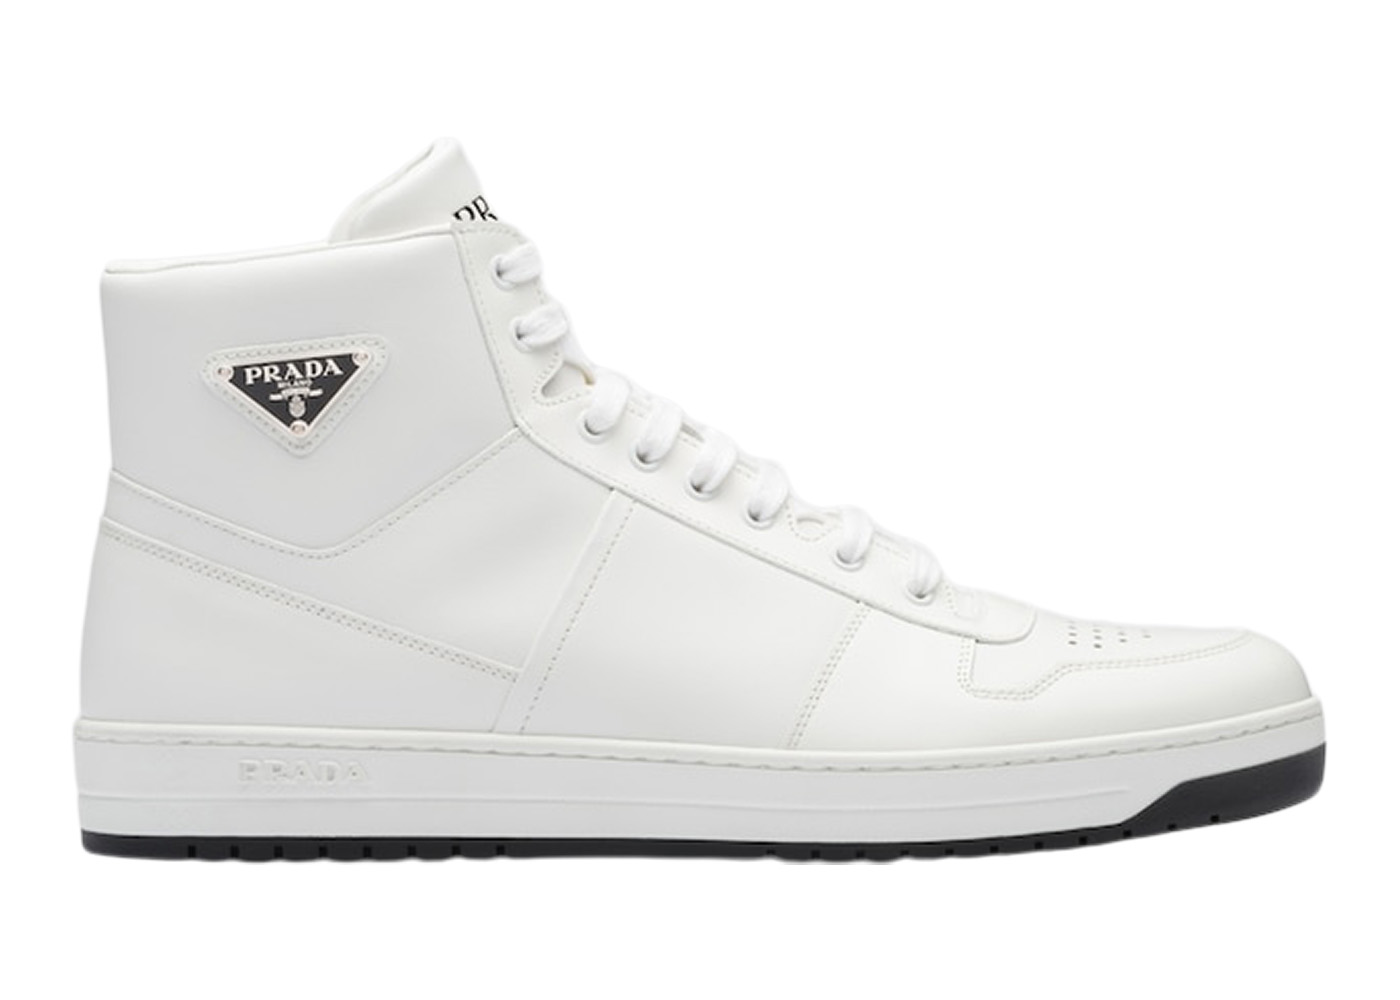 Prada Downtown High Top Sneakers Leather White White Black Men's 